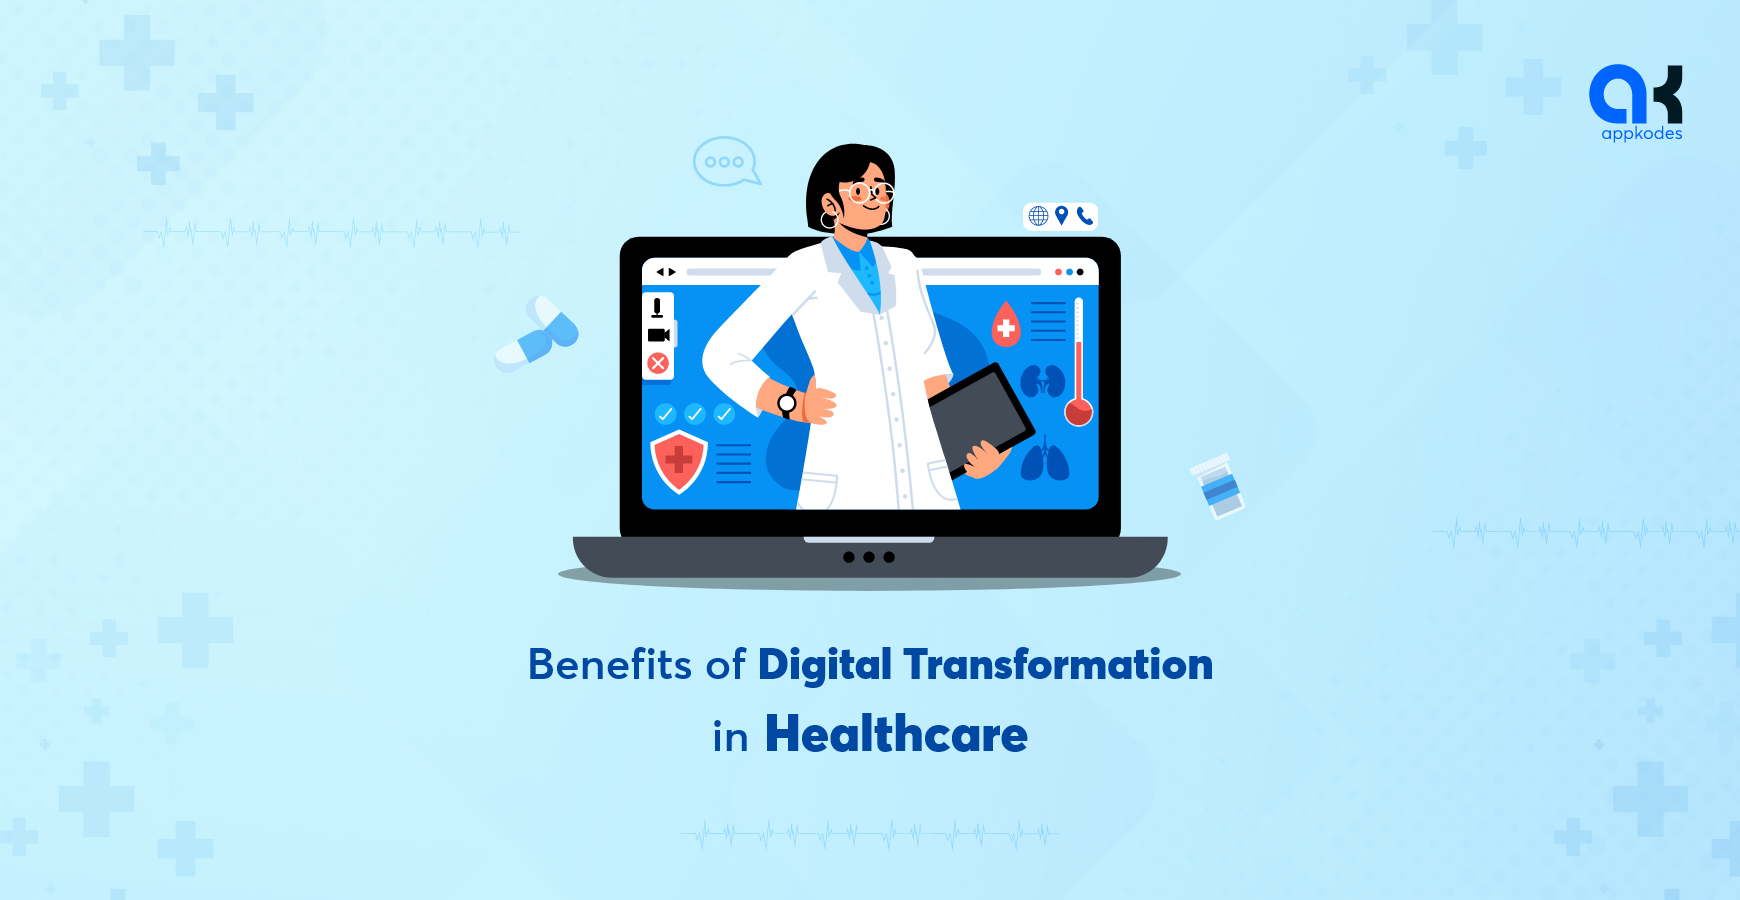 Benefits of digital transformation in healthcare